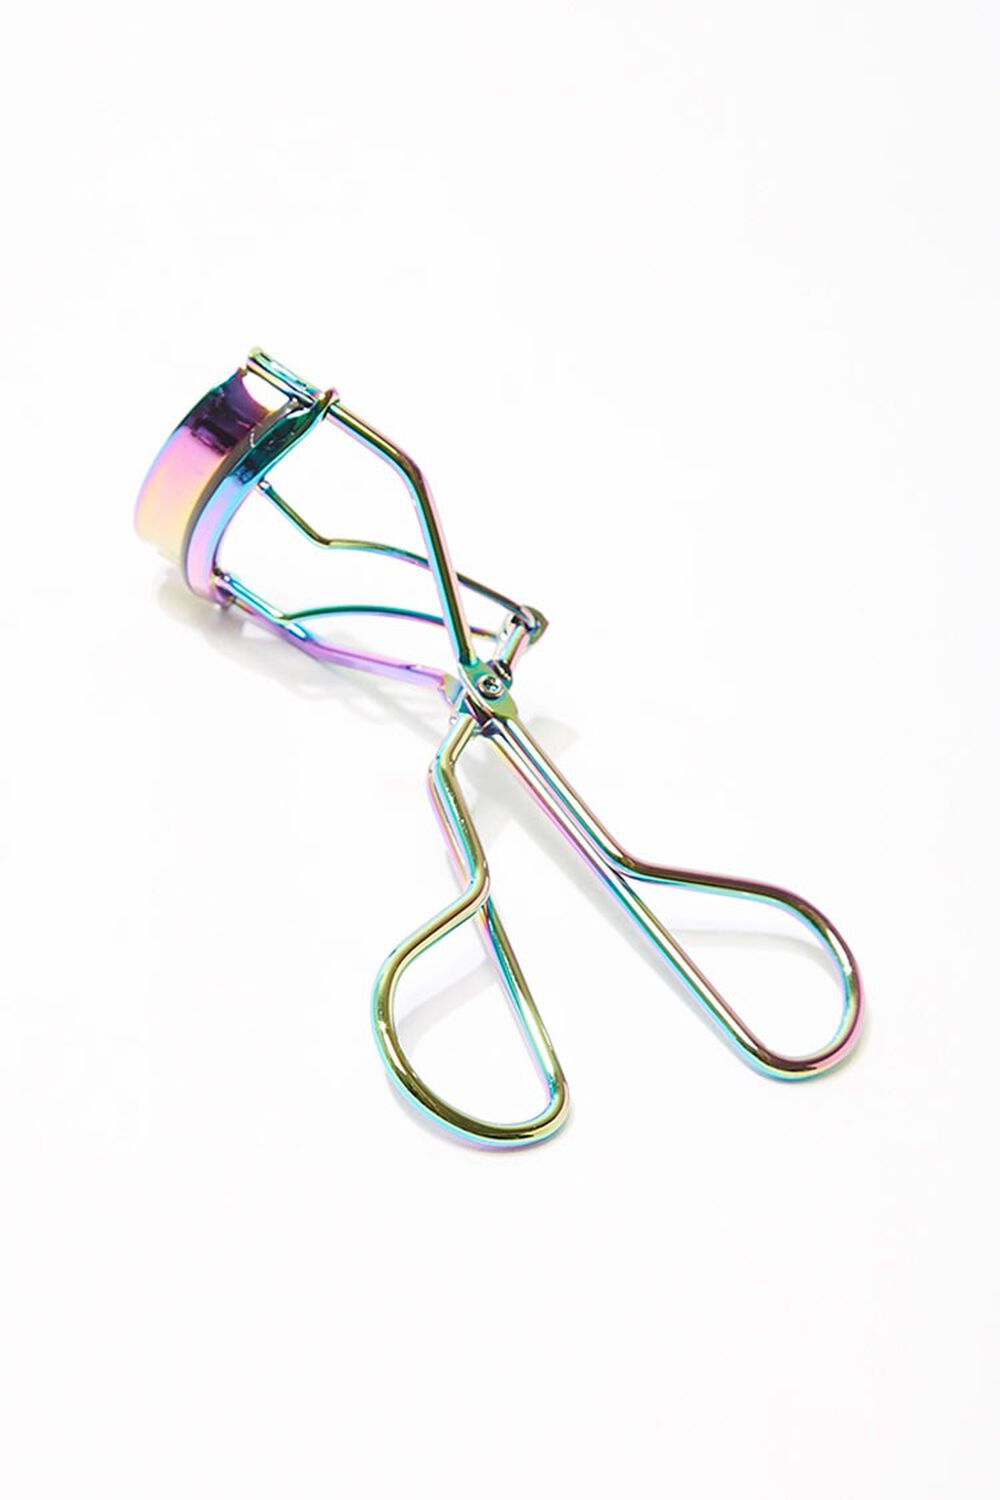 GREEN/BLUE Iridescent Metallic Eyelash Curler, image 1